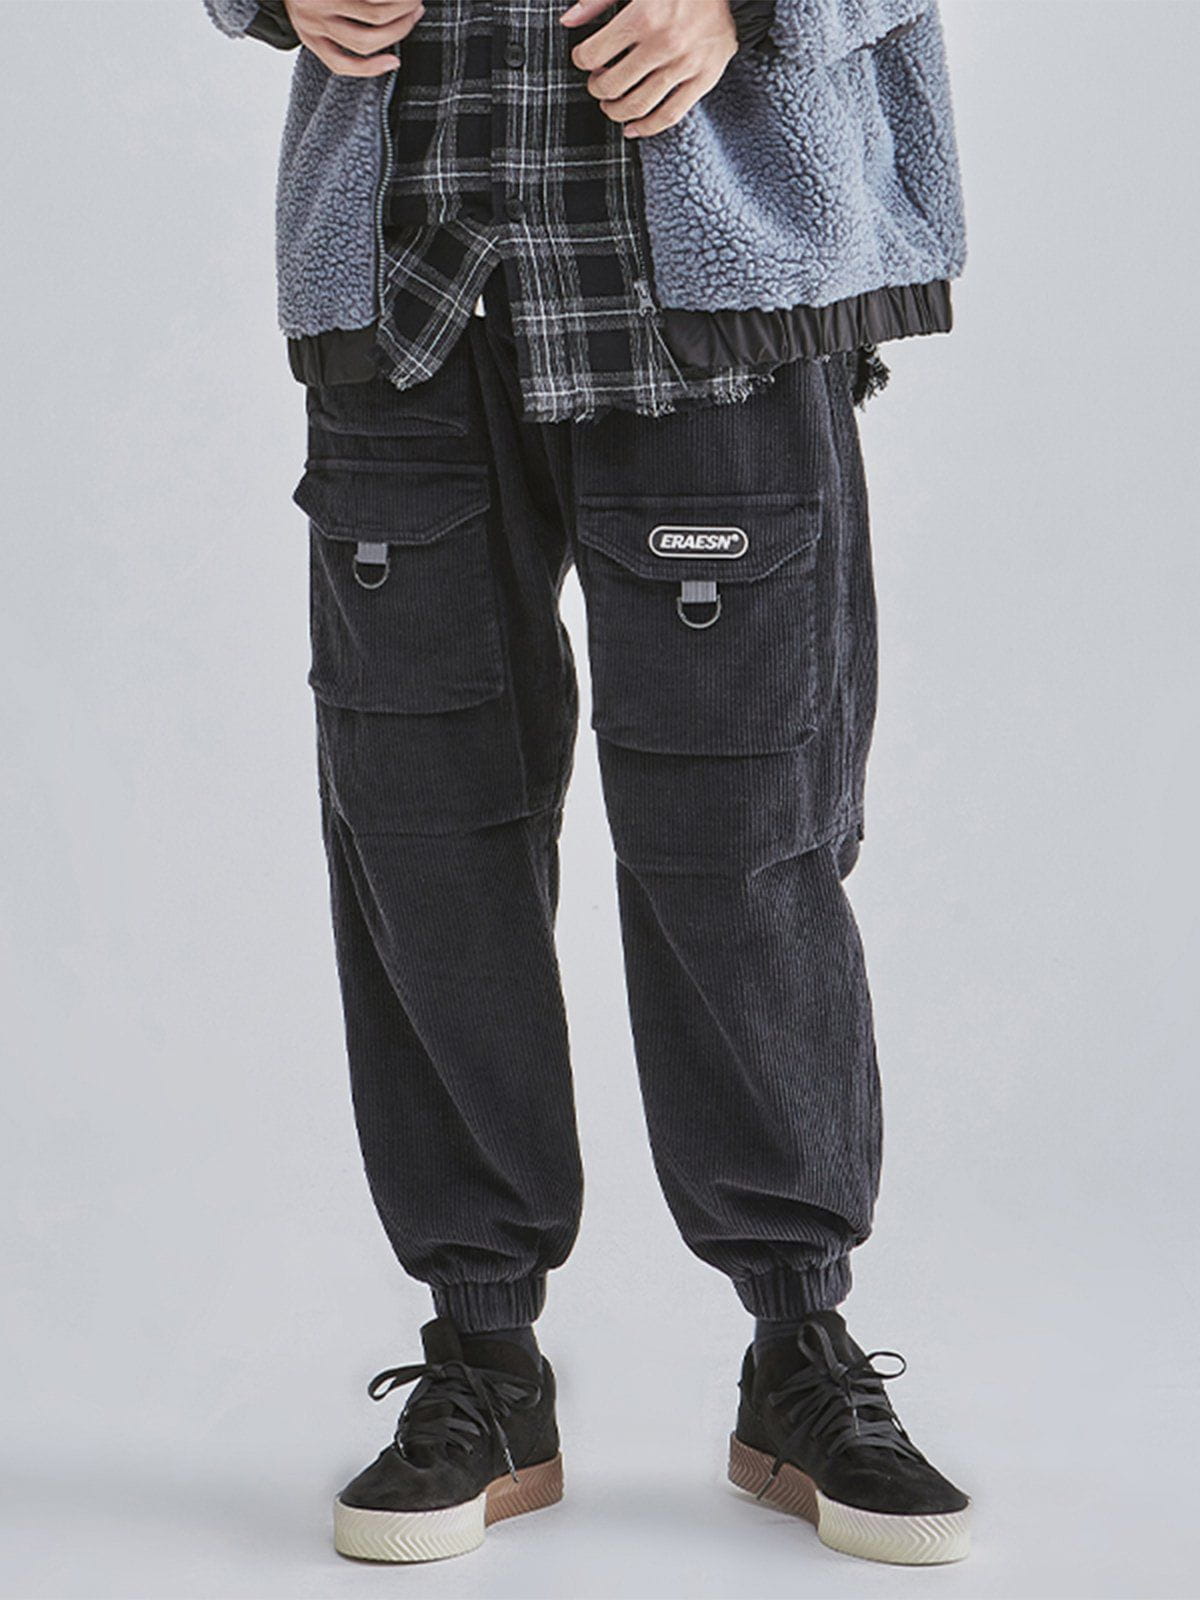 Majesda® - Corduroy Multi Pocket Cargo Pants outfit ideas streetwear fashion